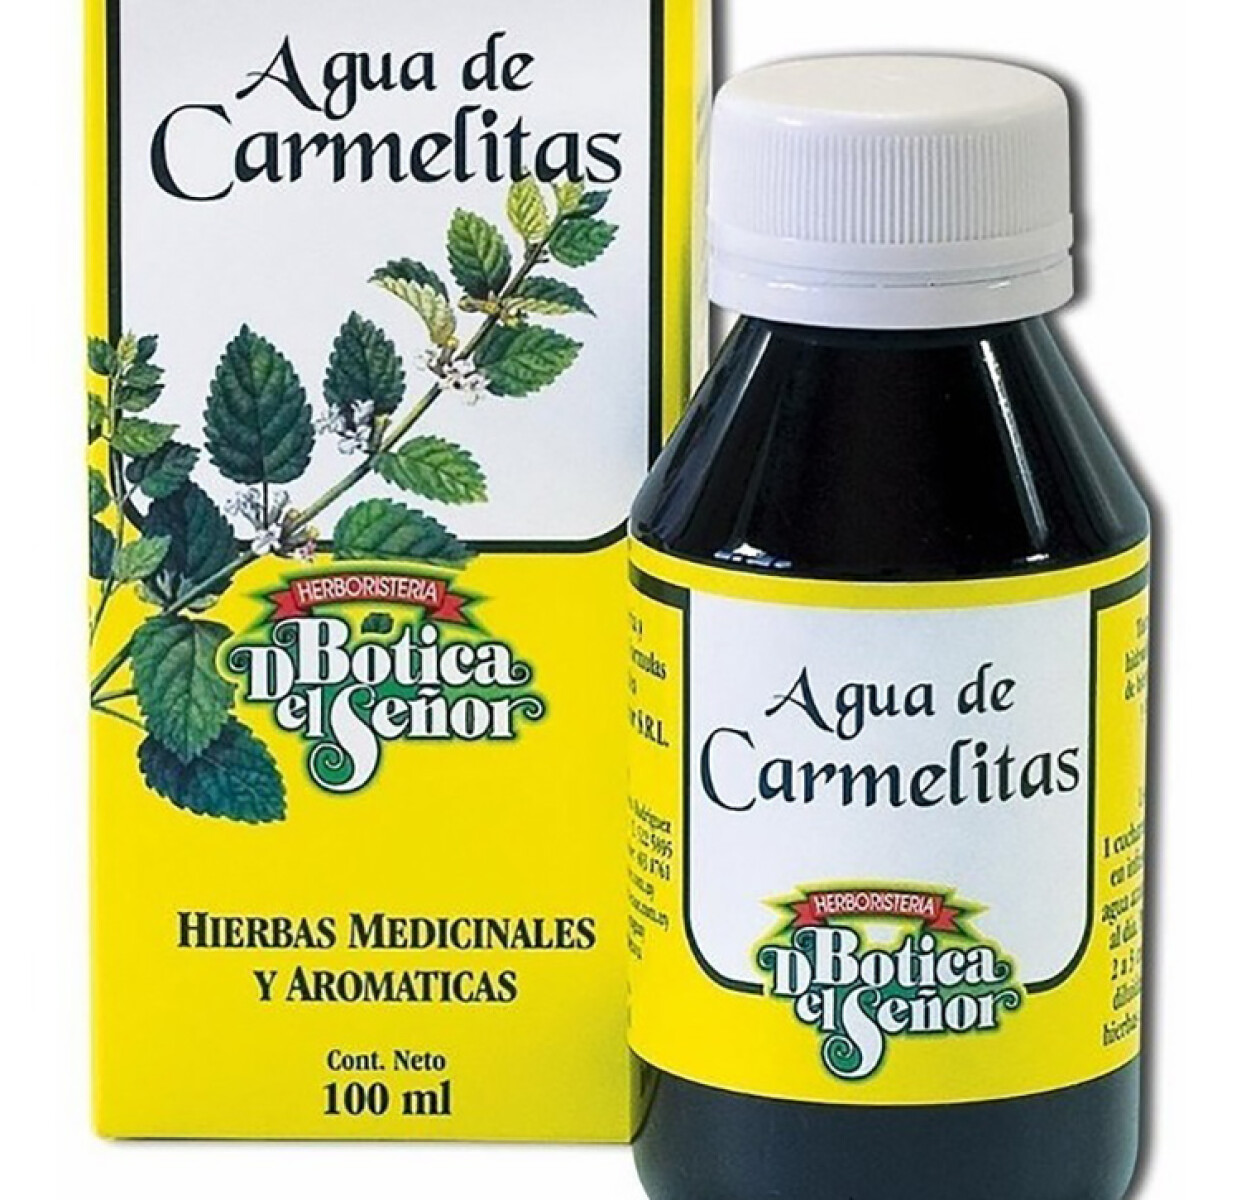 Tintura fitoextracto Botica del Señor - Agua de carmelitas 100 ml 